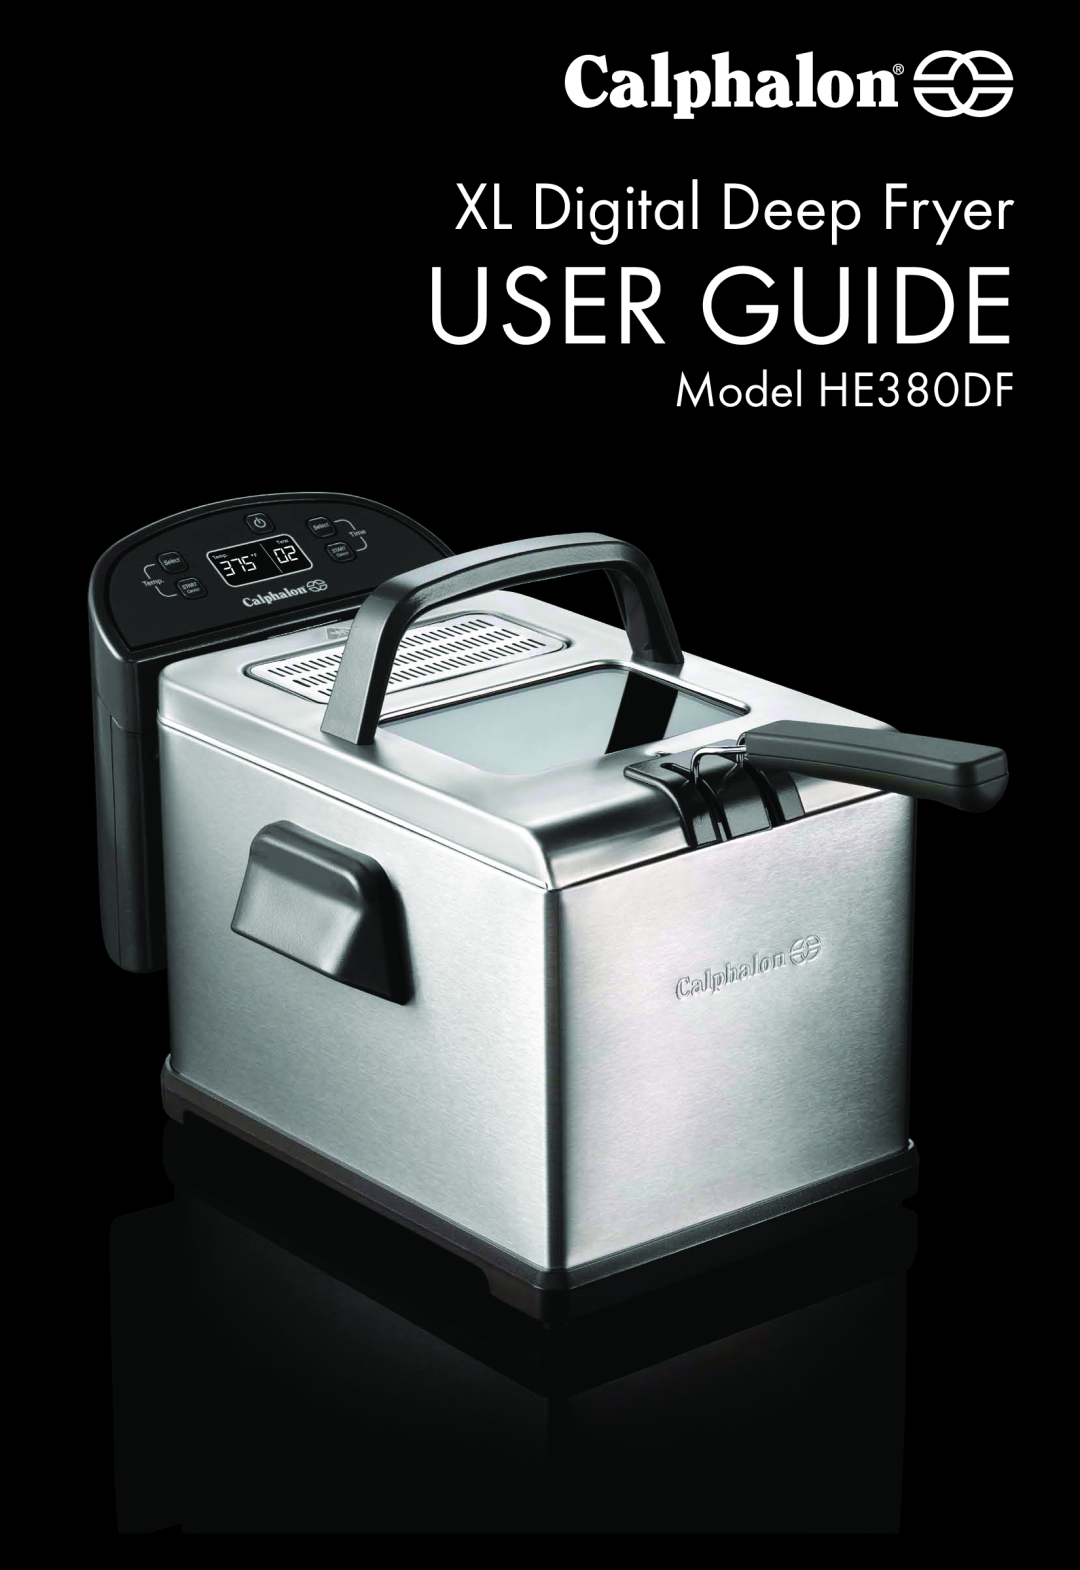 Calphalon manual User Guide, XL Digital Deep Fryer, Model HE380DF 